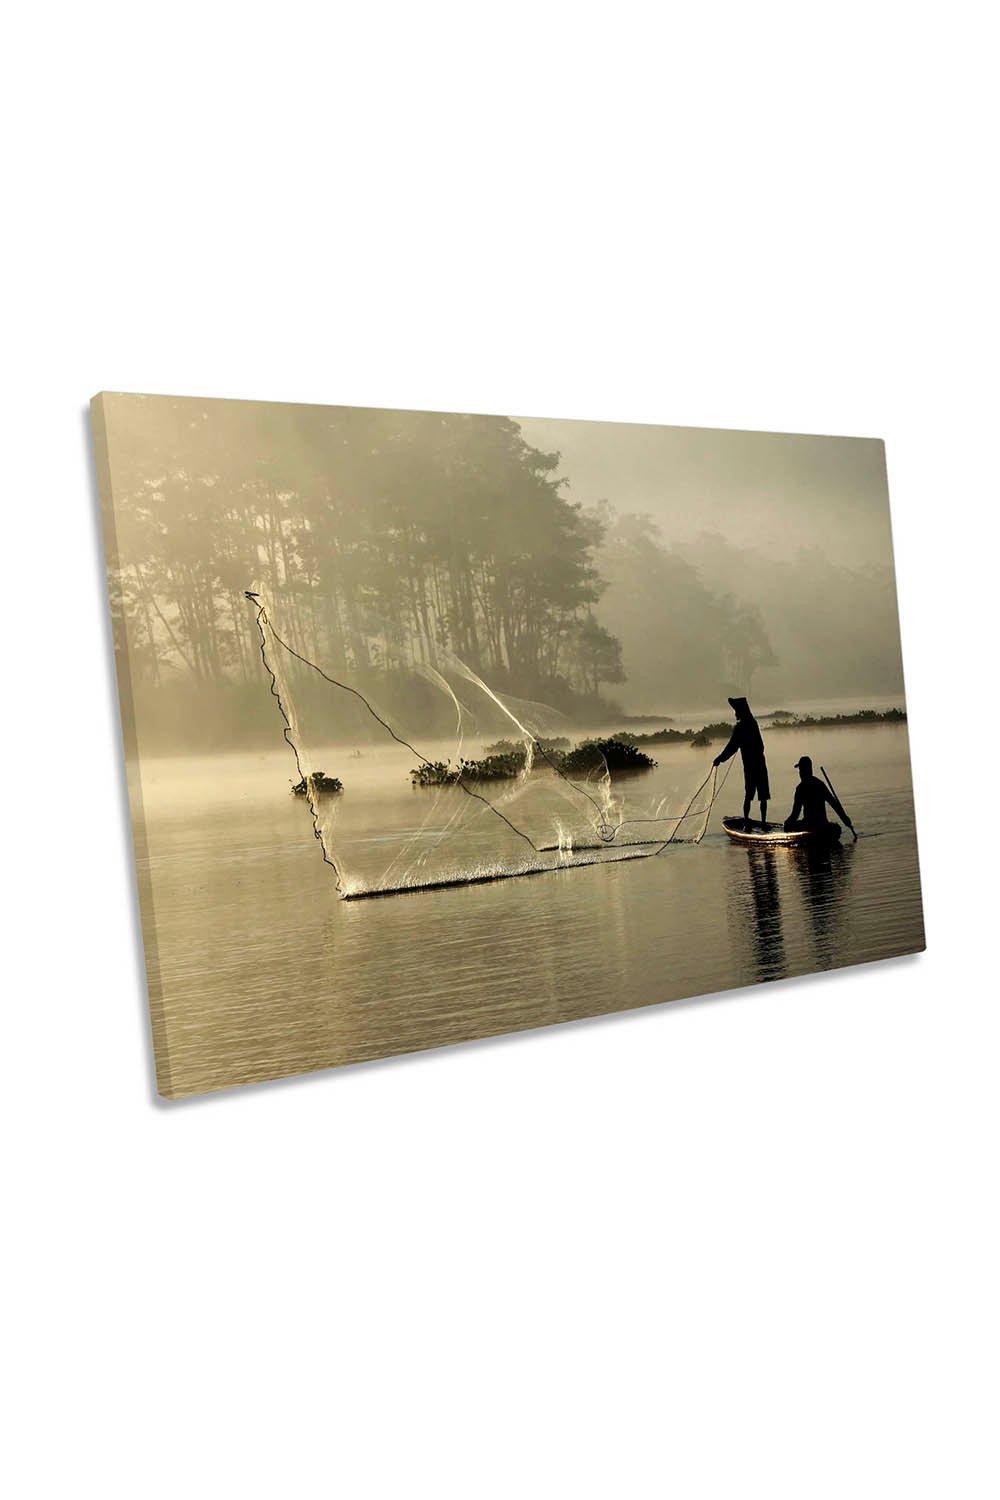 Morning Mist Fisherman Net Asia Lake Canvas Wall Art Picture Print